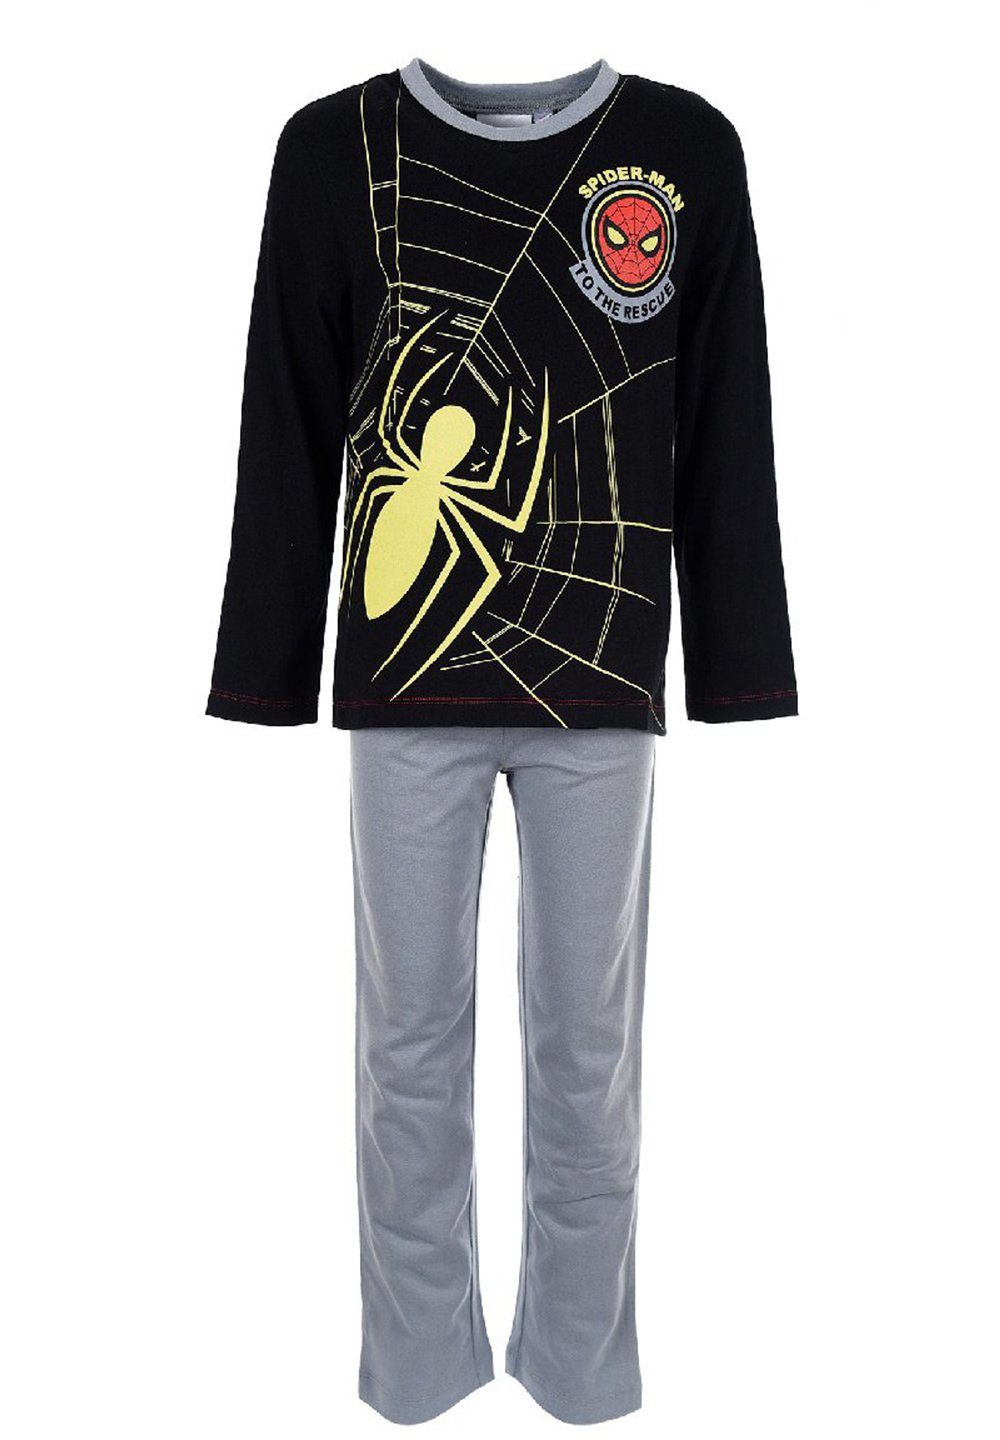 Spiderman Pyjamas online kaufen | OTTO